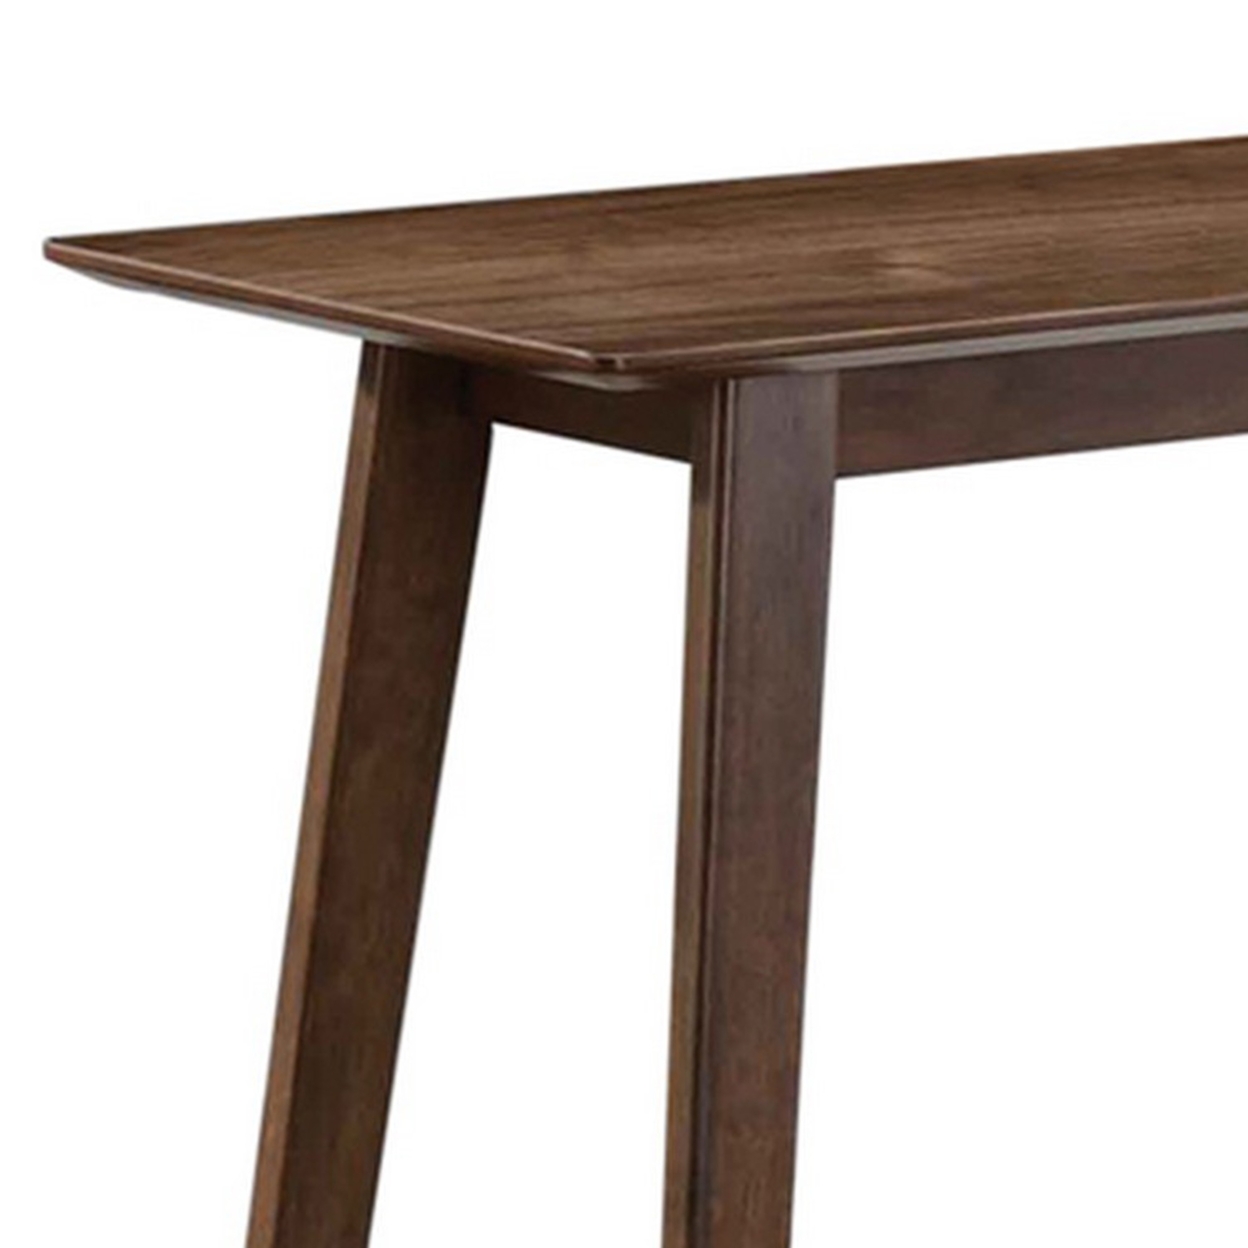 Rectangular Wooden Bar Table With Angled Tapered Legs, Walnut Brown- Saltoro Sherpi